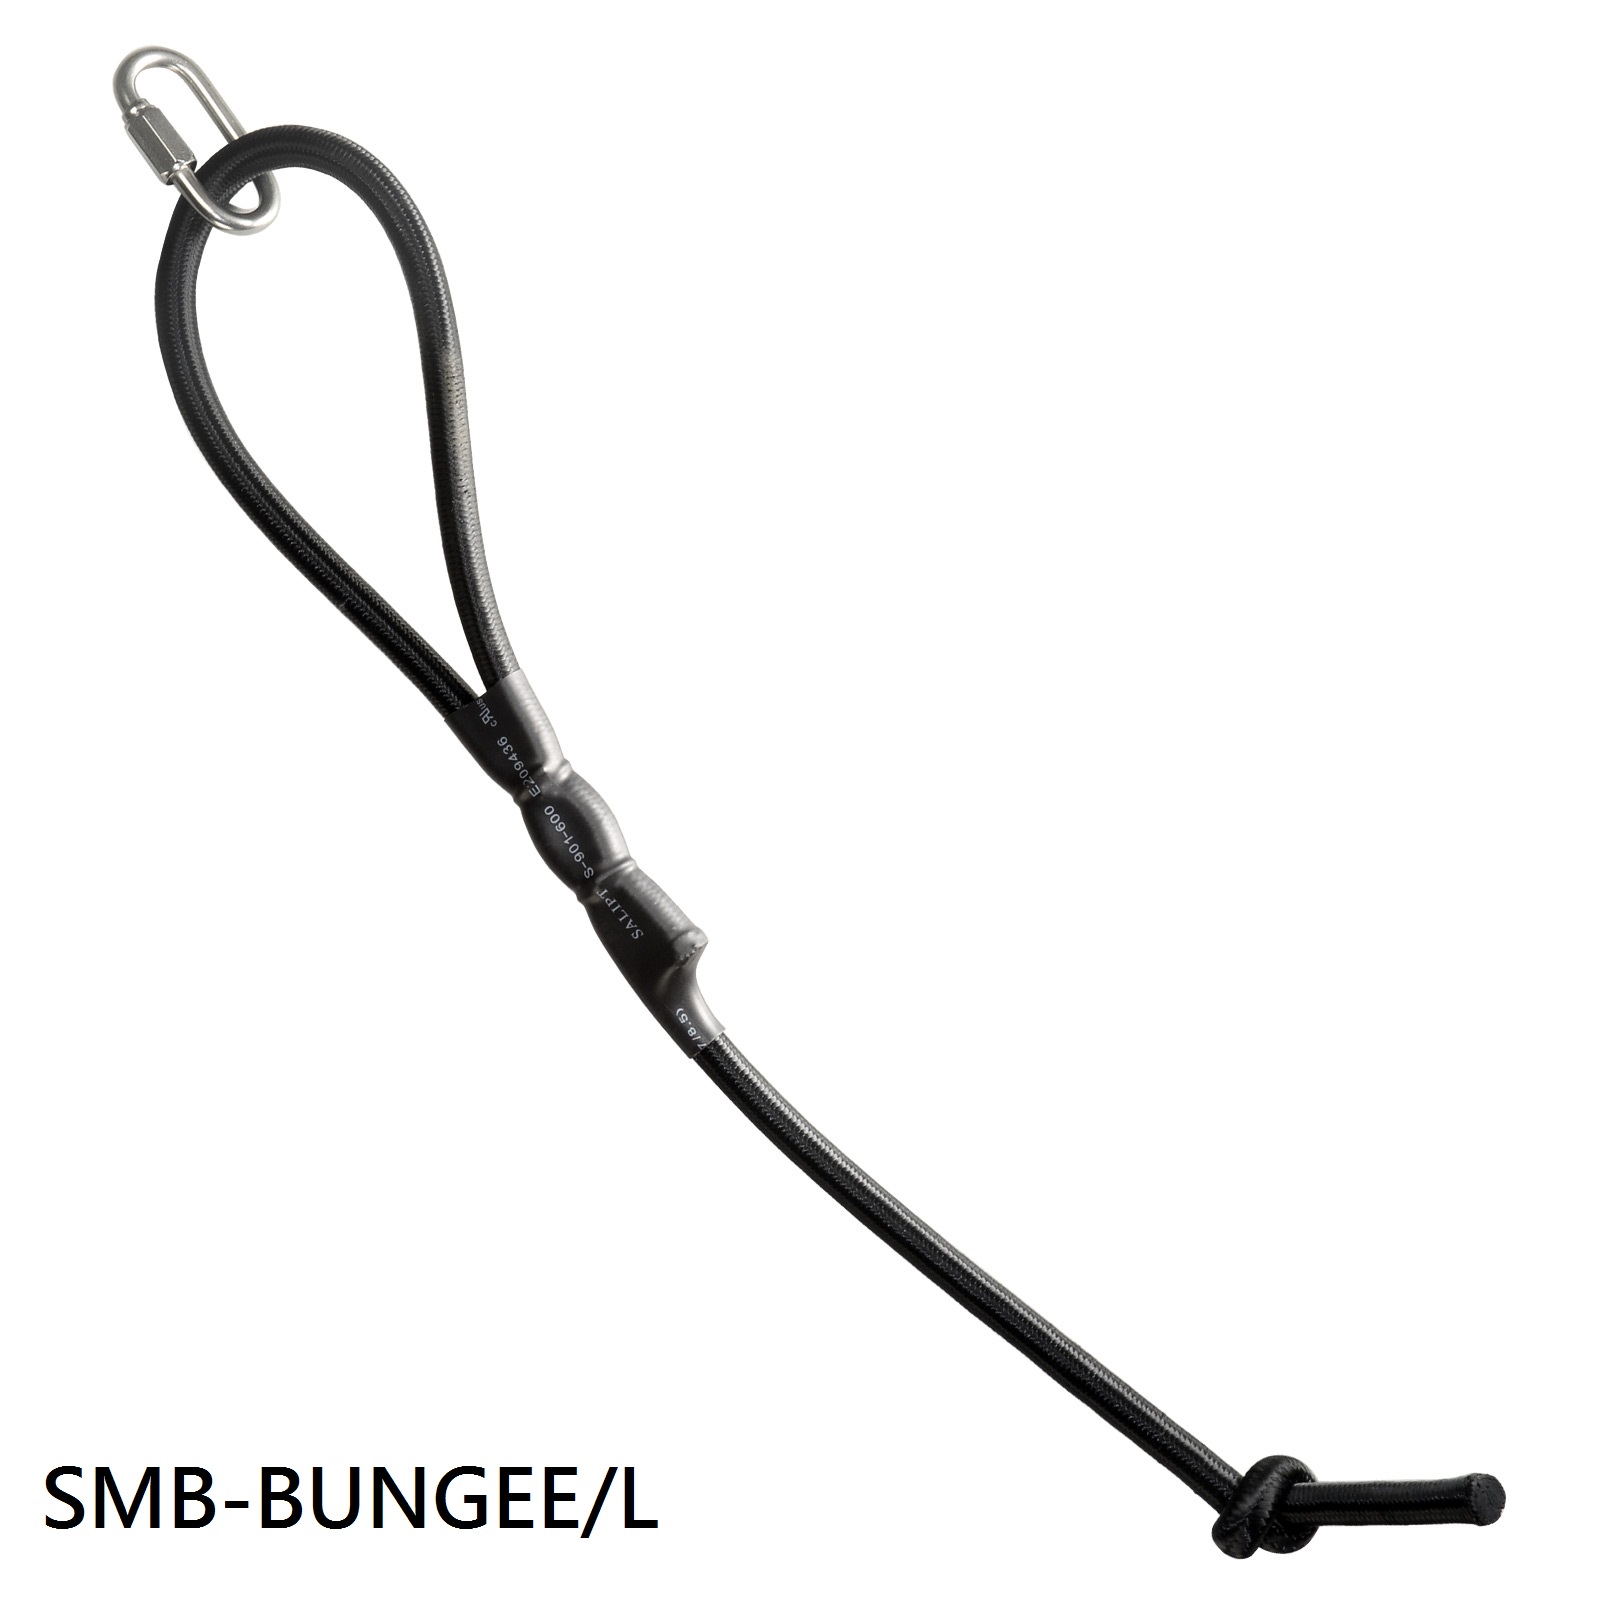 SMB-BUNGEE/L